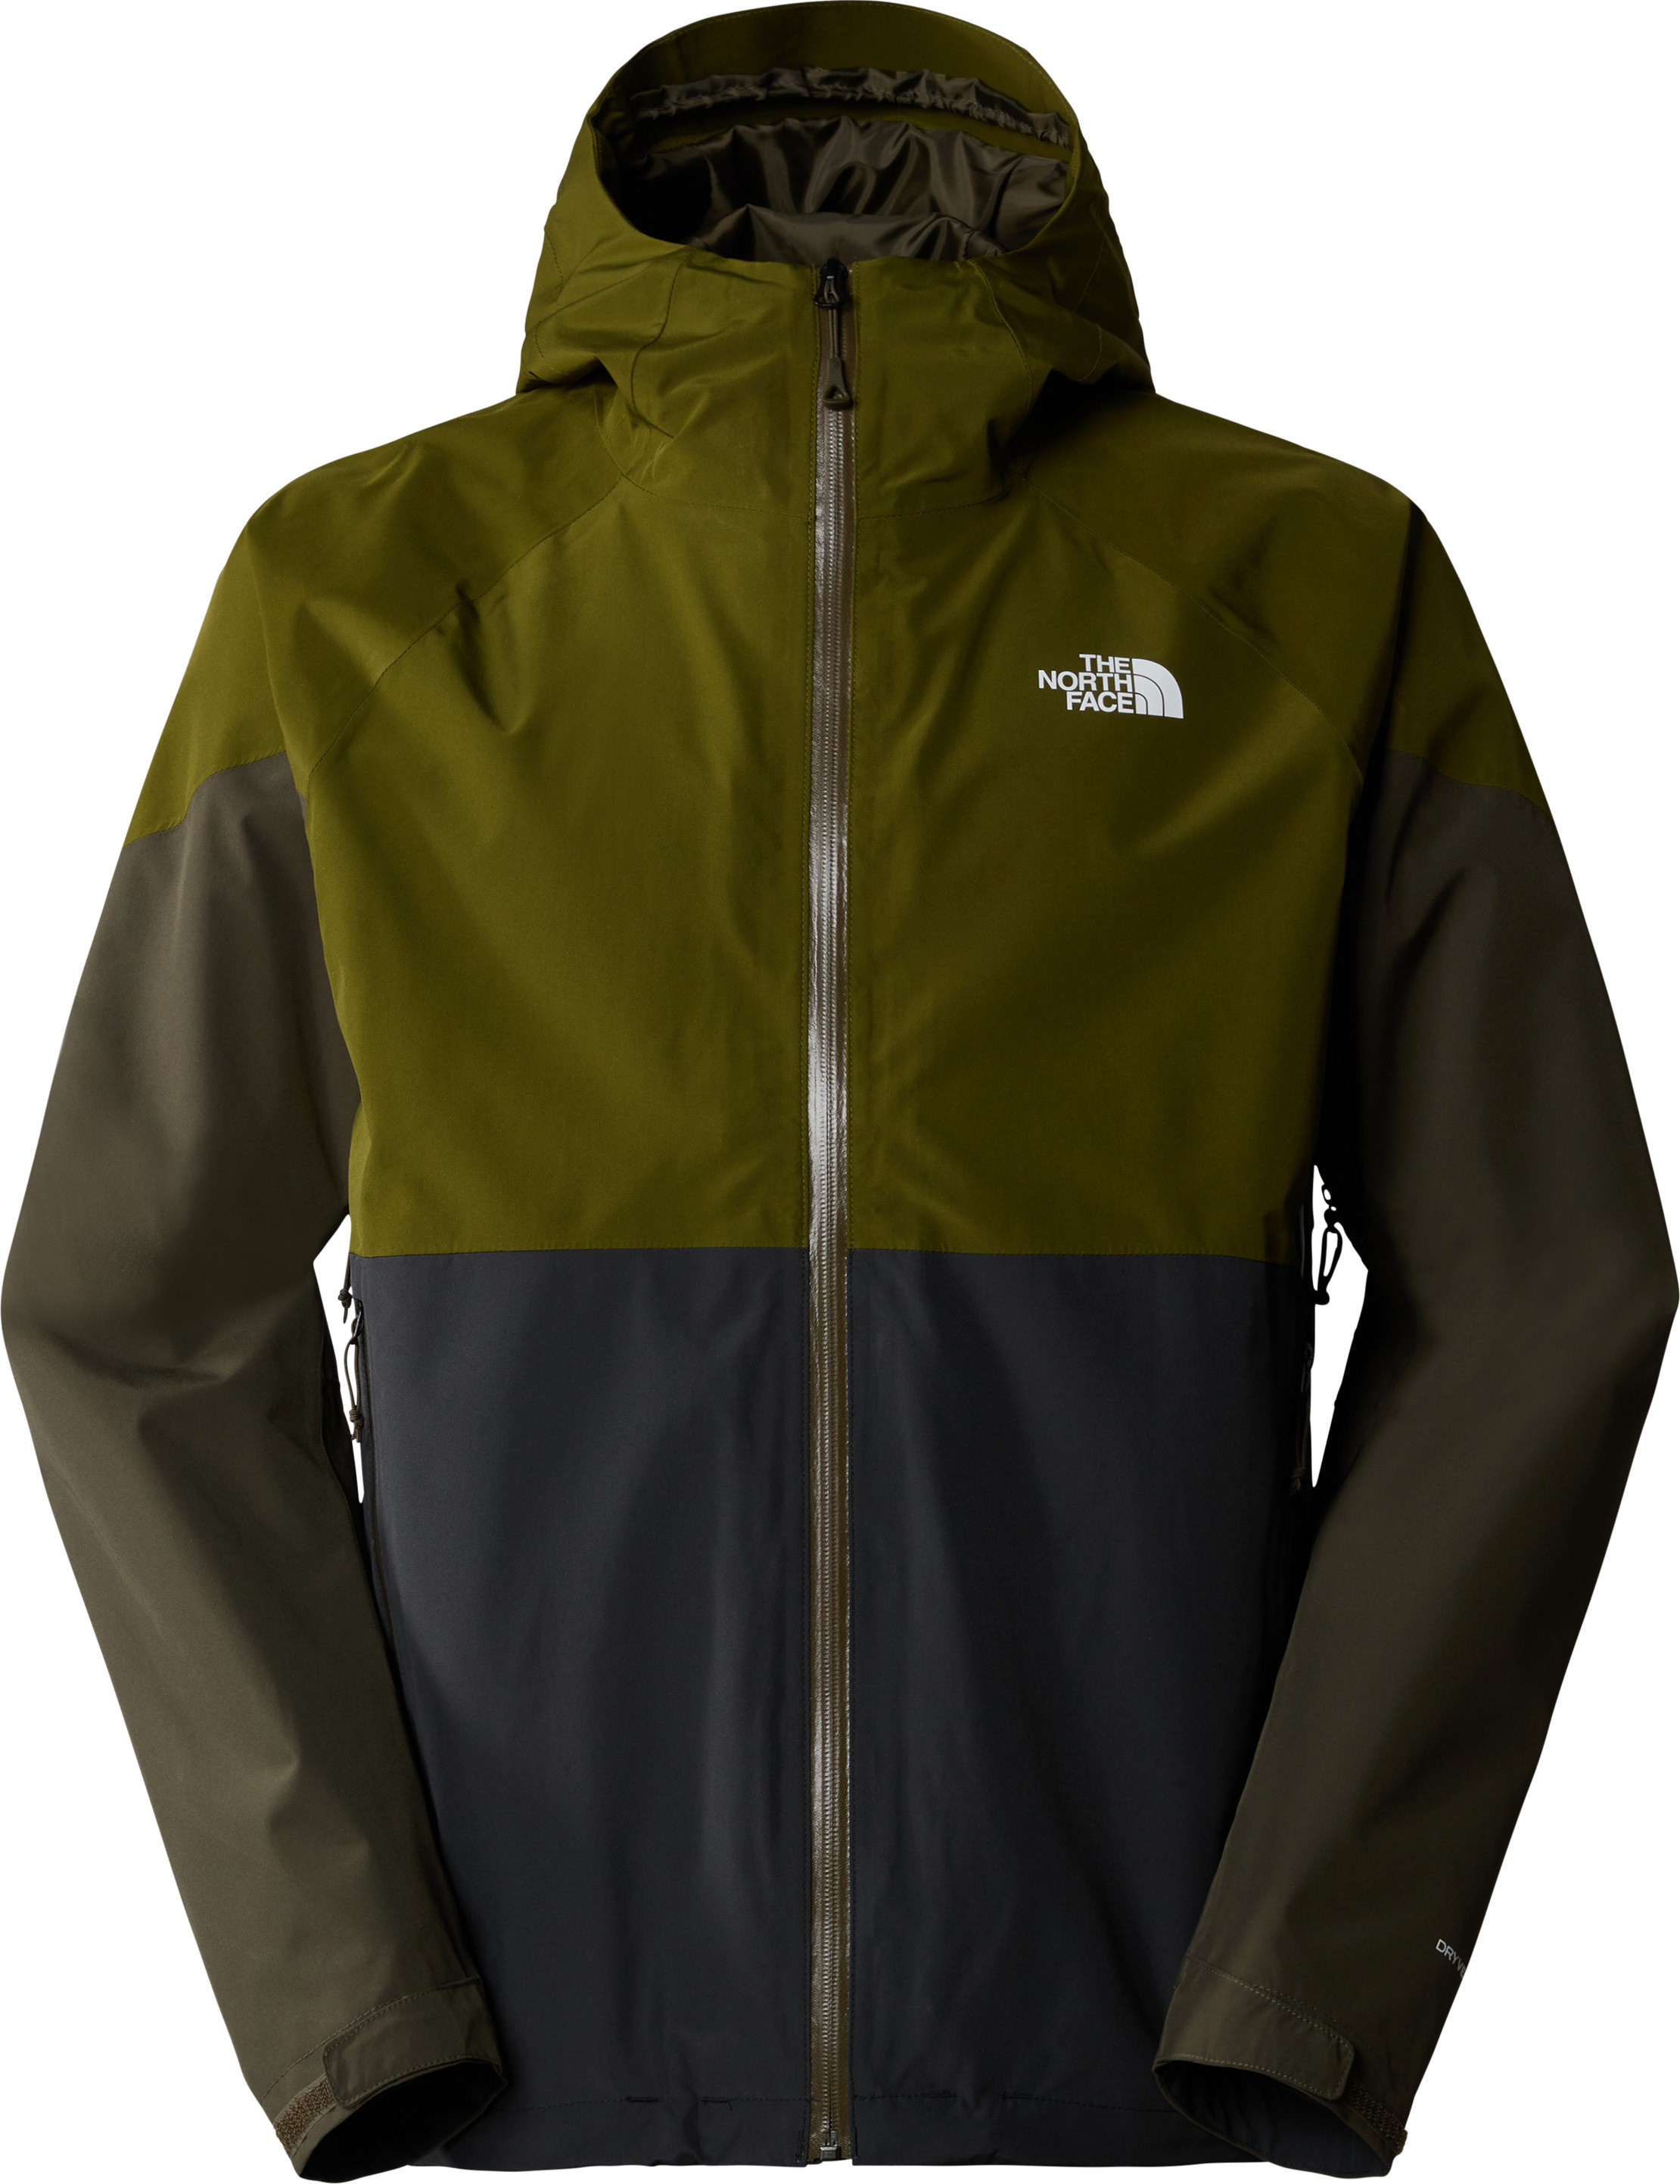 The North Face Men’s Lightning Zip-In Jacket Asphalt Grey/Forest Olive/New Taupe Green